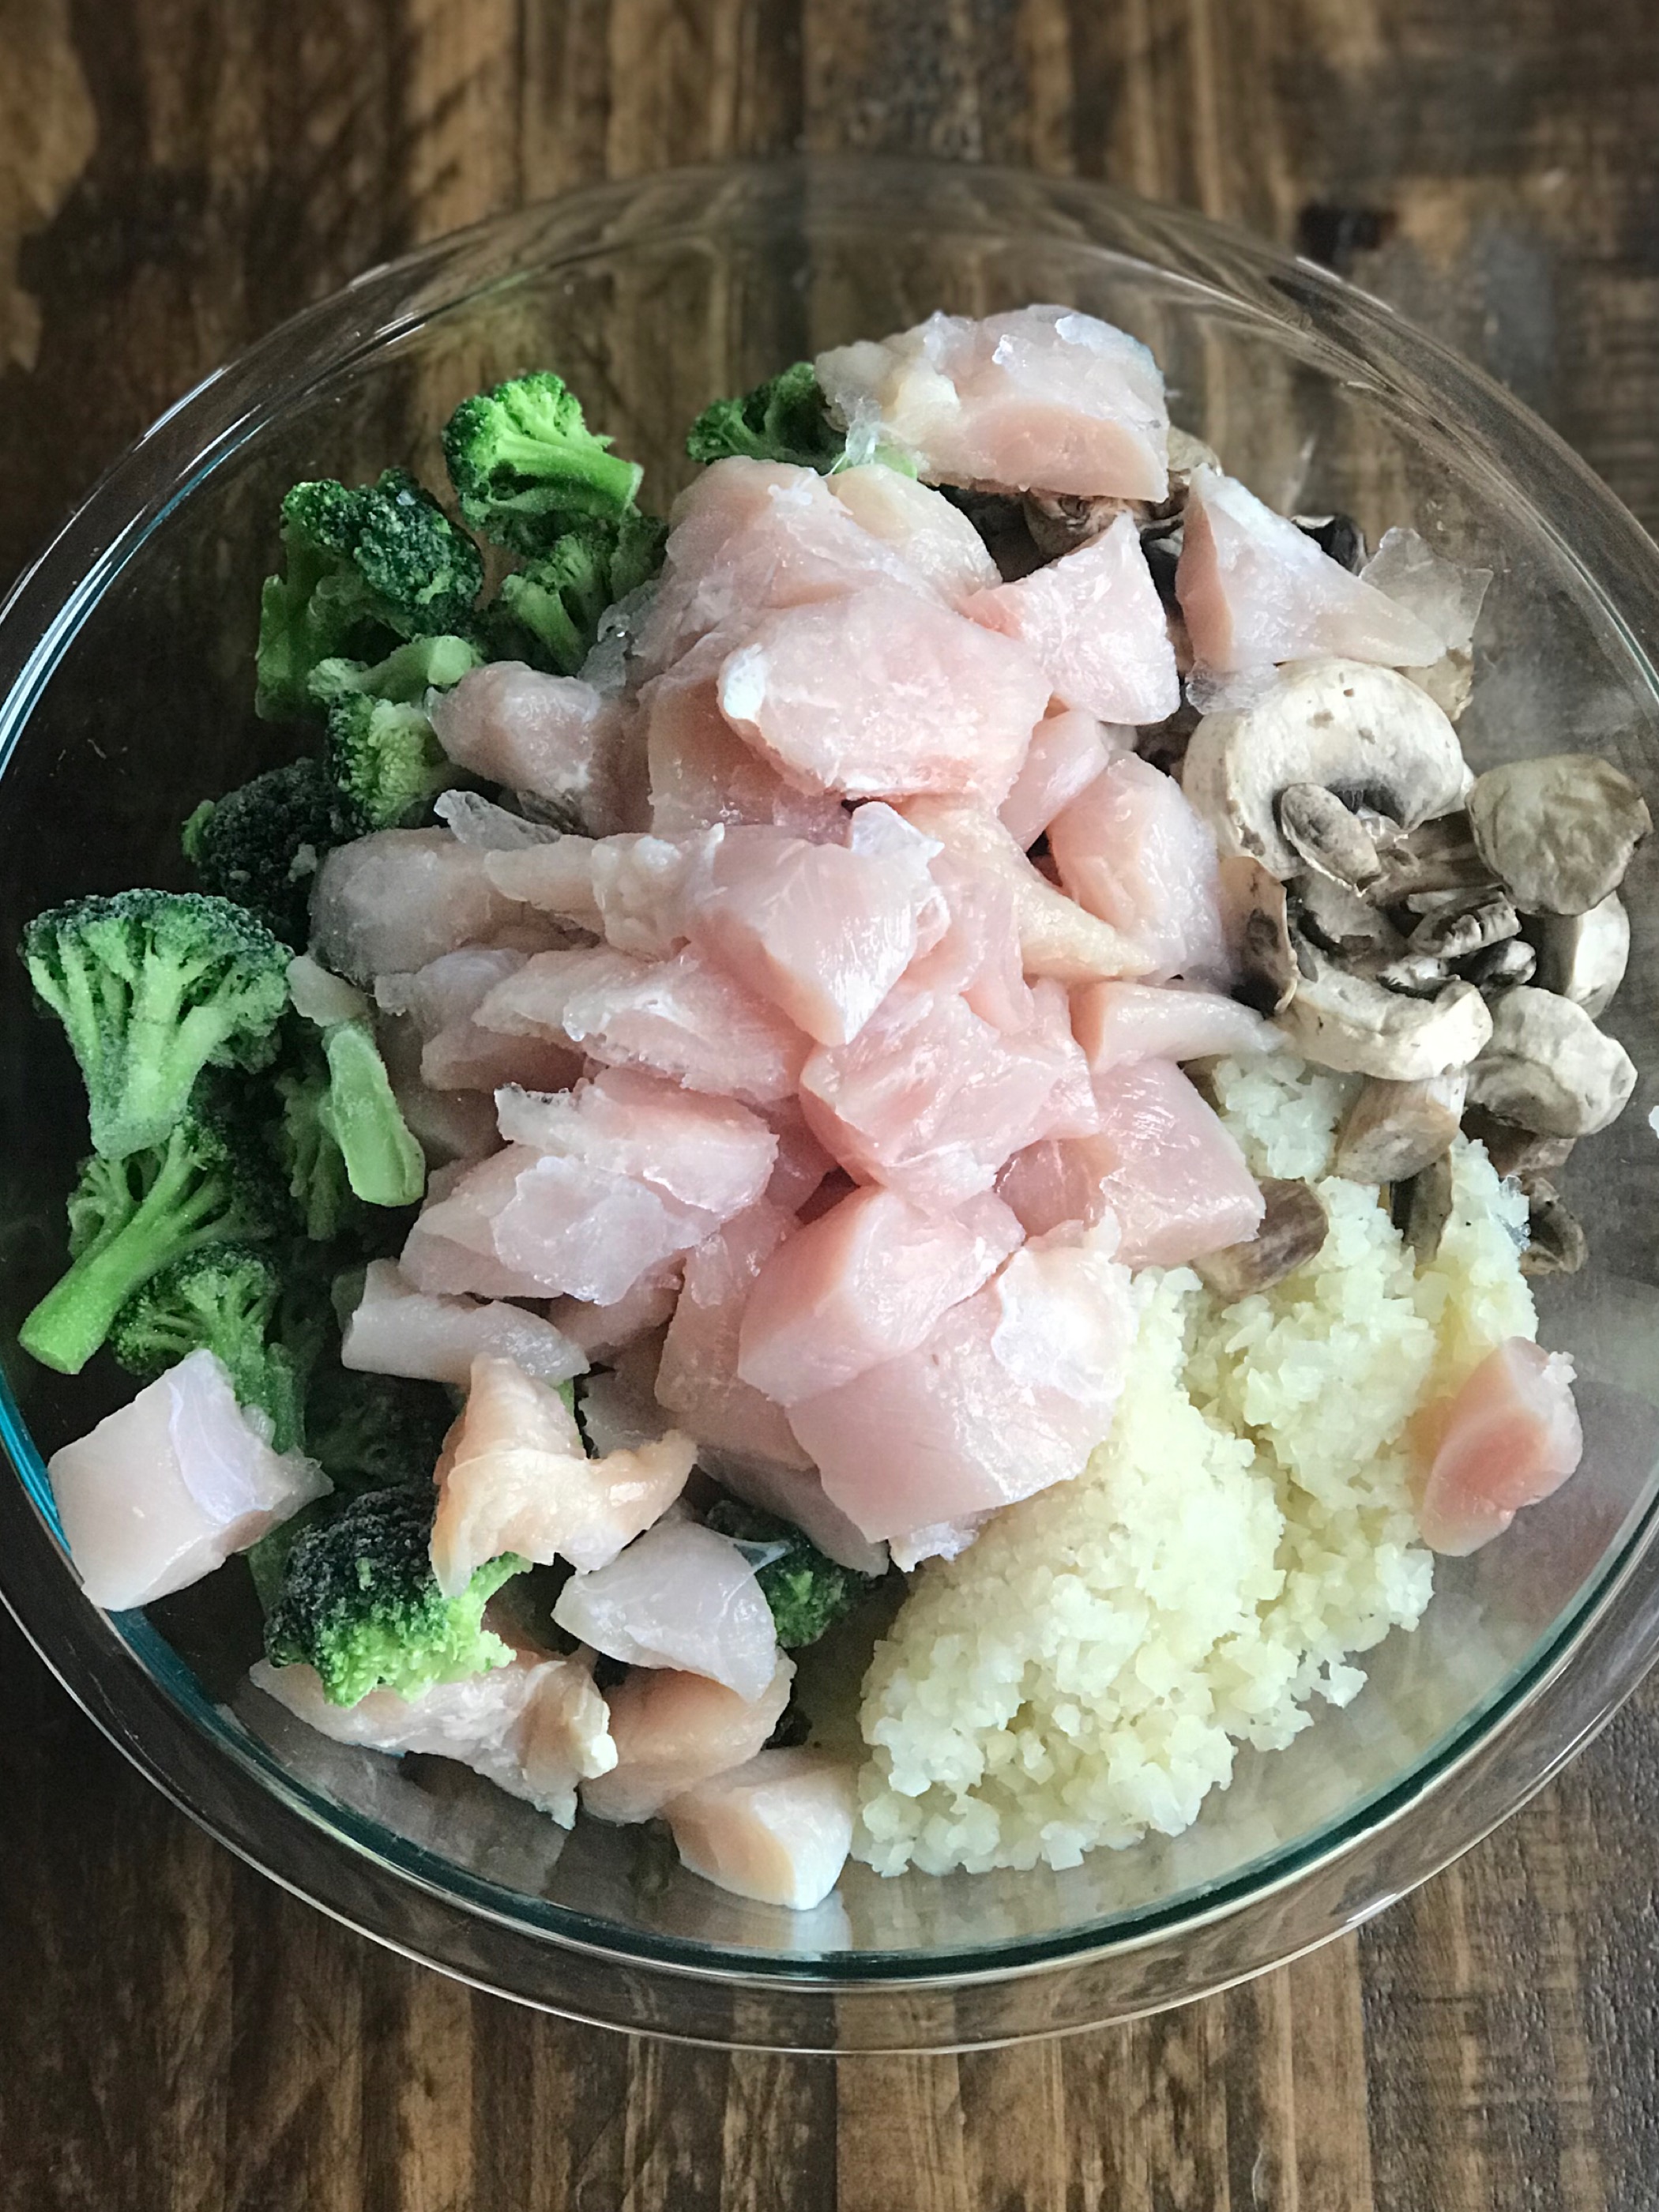 chicken broccoli rice